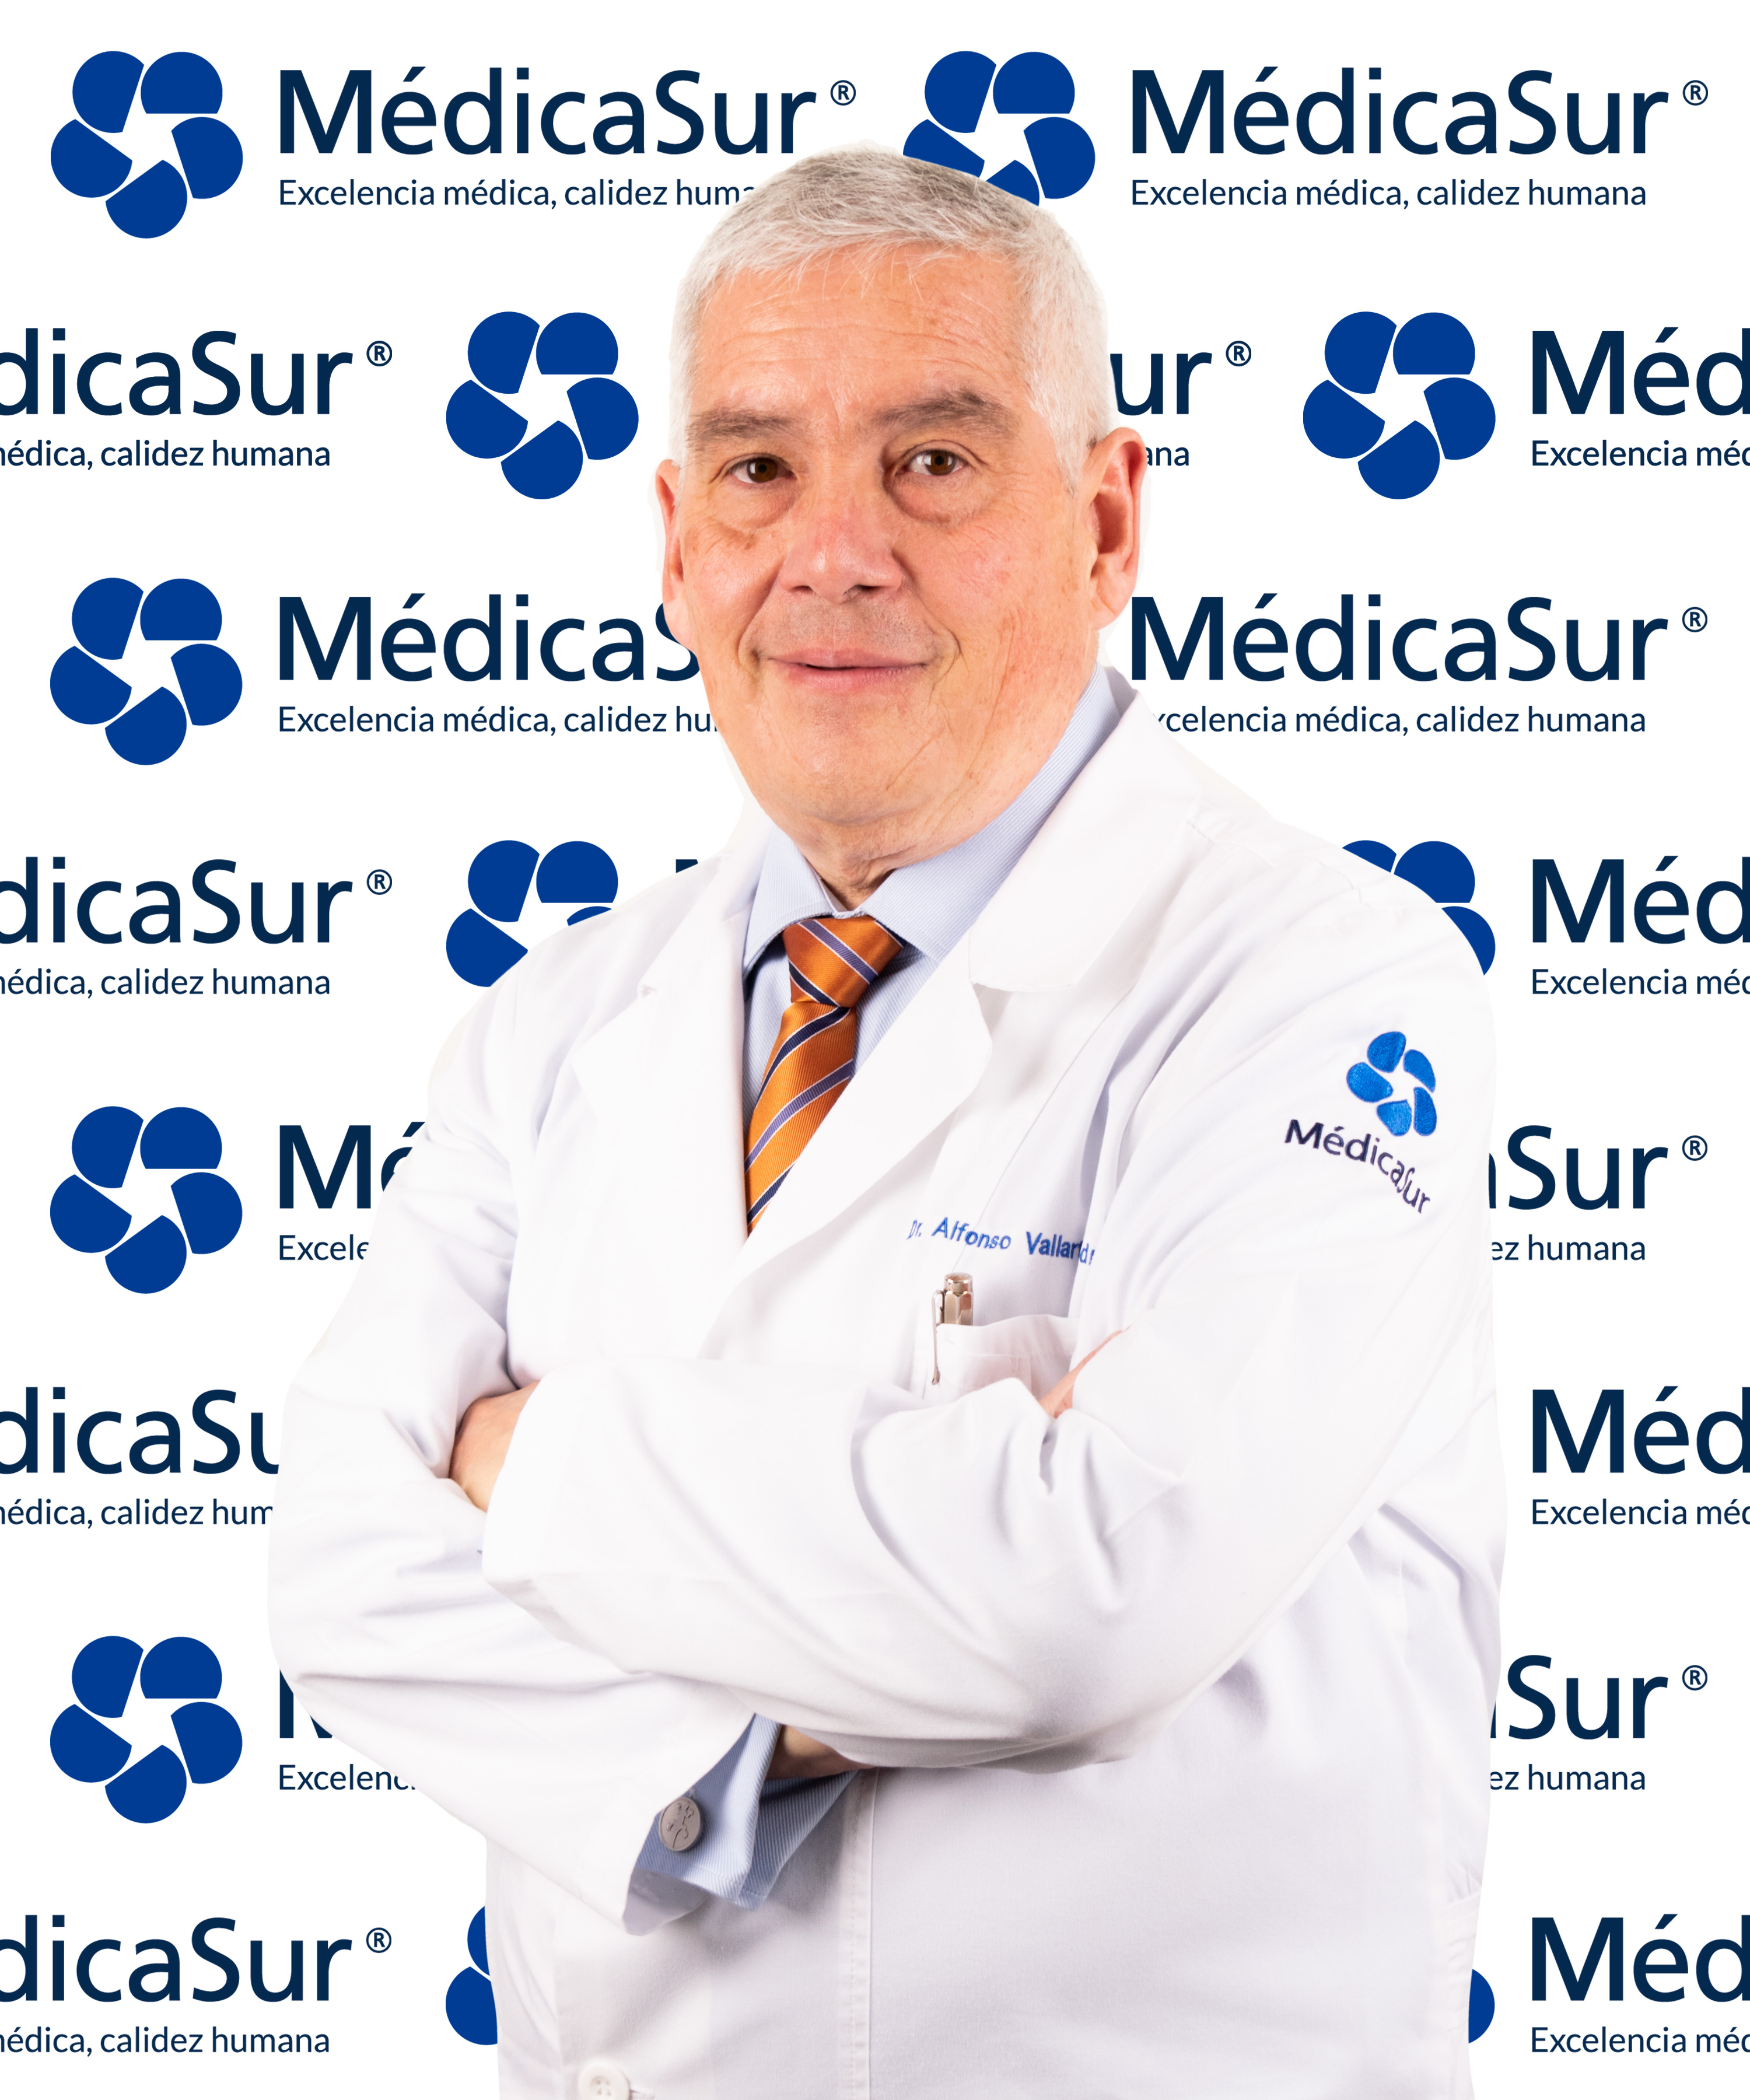 Dr. Raúl Alfonso Vallarta Rodríguez